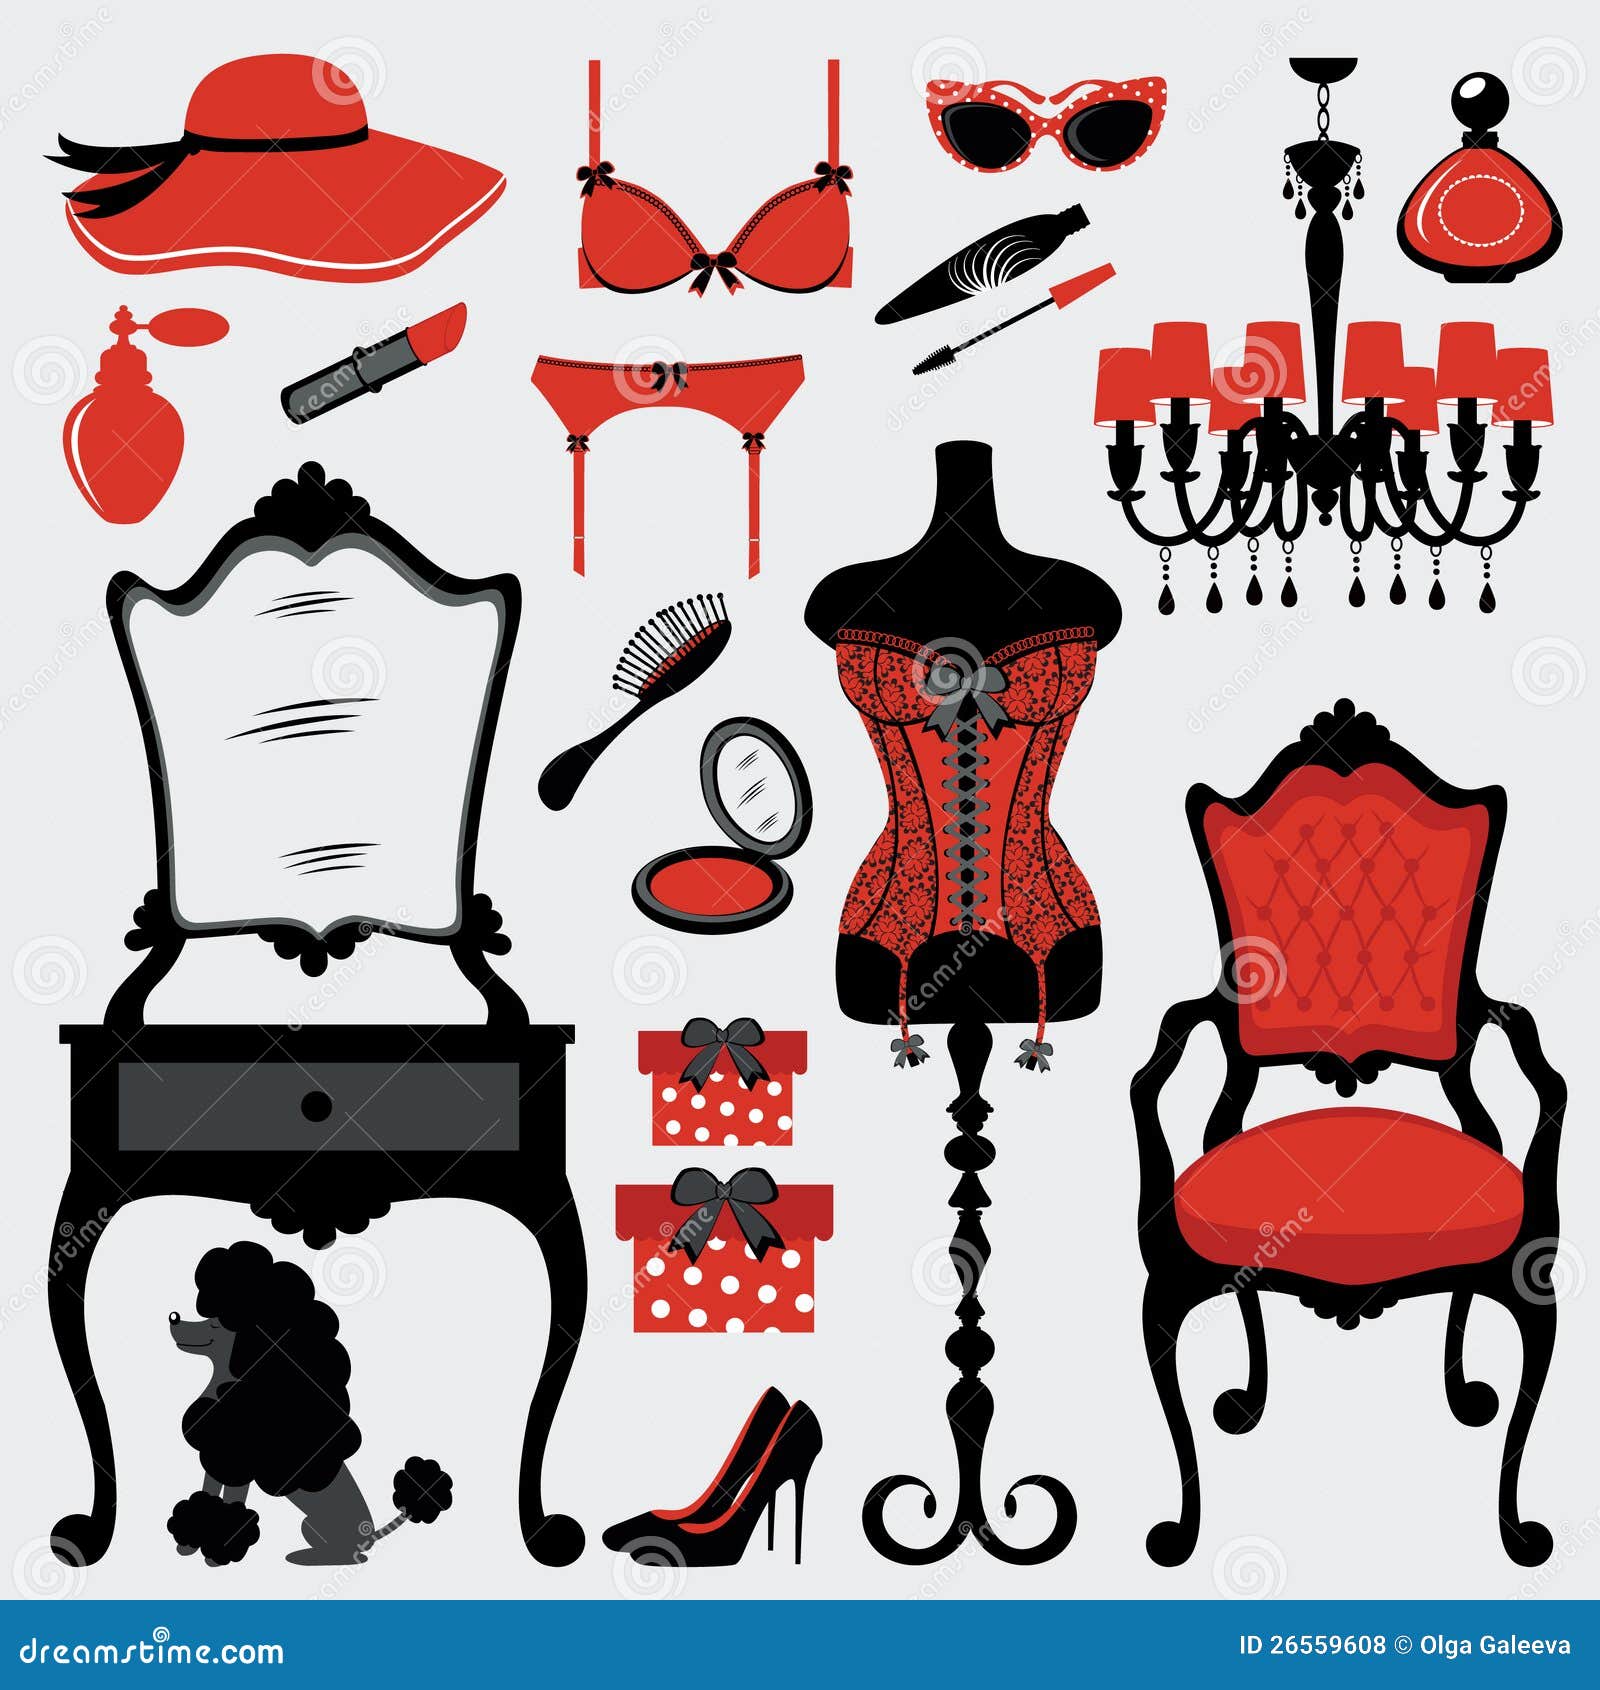 Boudoir stock vector. Illustration of decor, chair, chandelier - 26559608